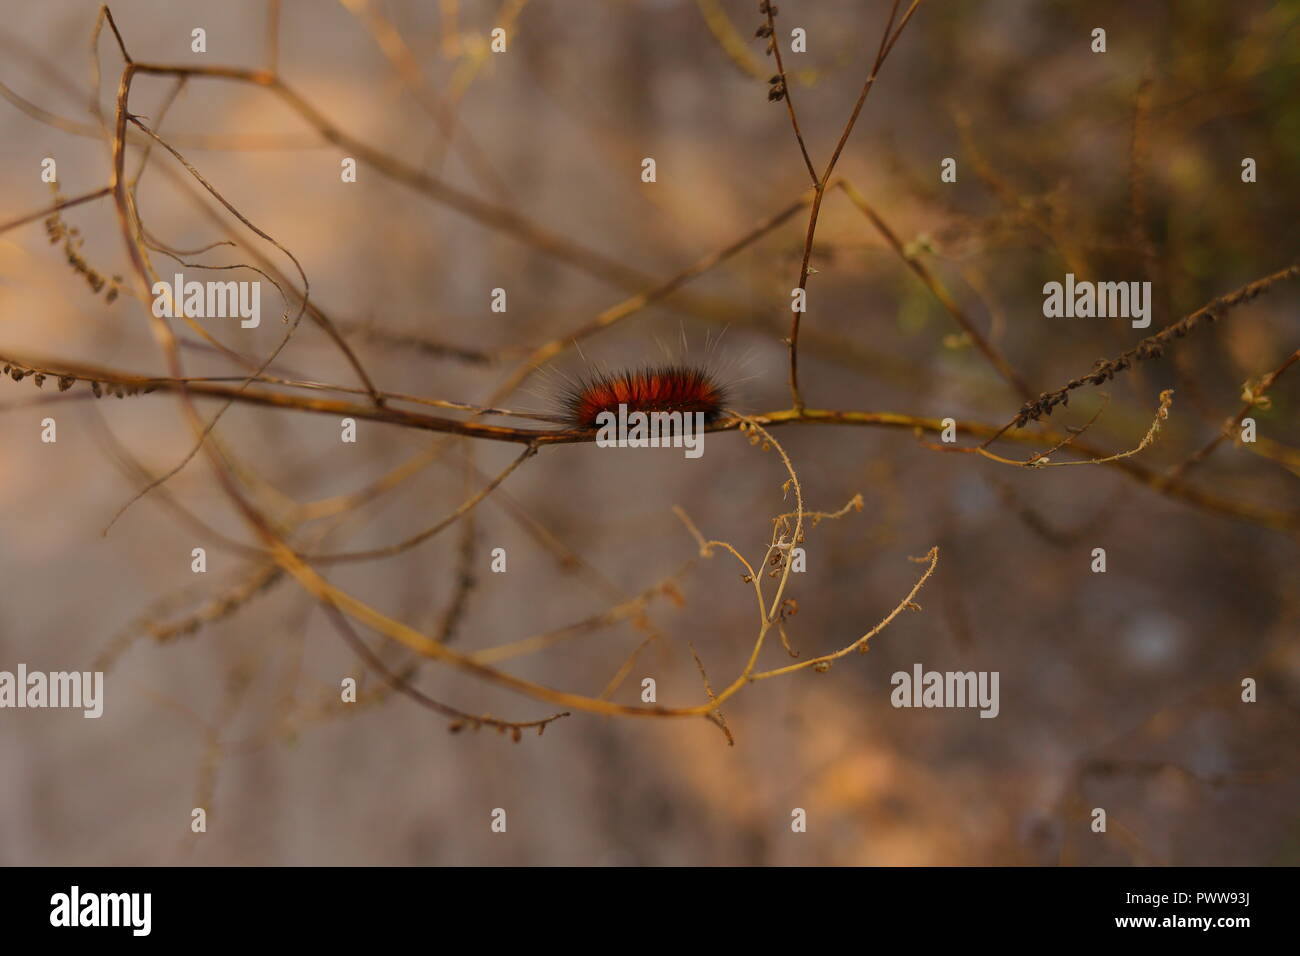 Furry orange caterpillar on branch. Photo taken in the fall on Ward Island, Toronto, Ontario, Canada. Stock Photo